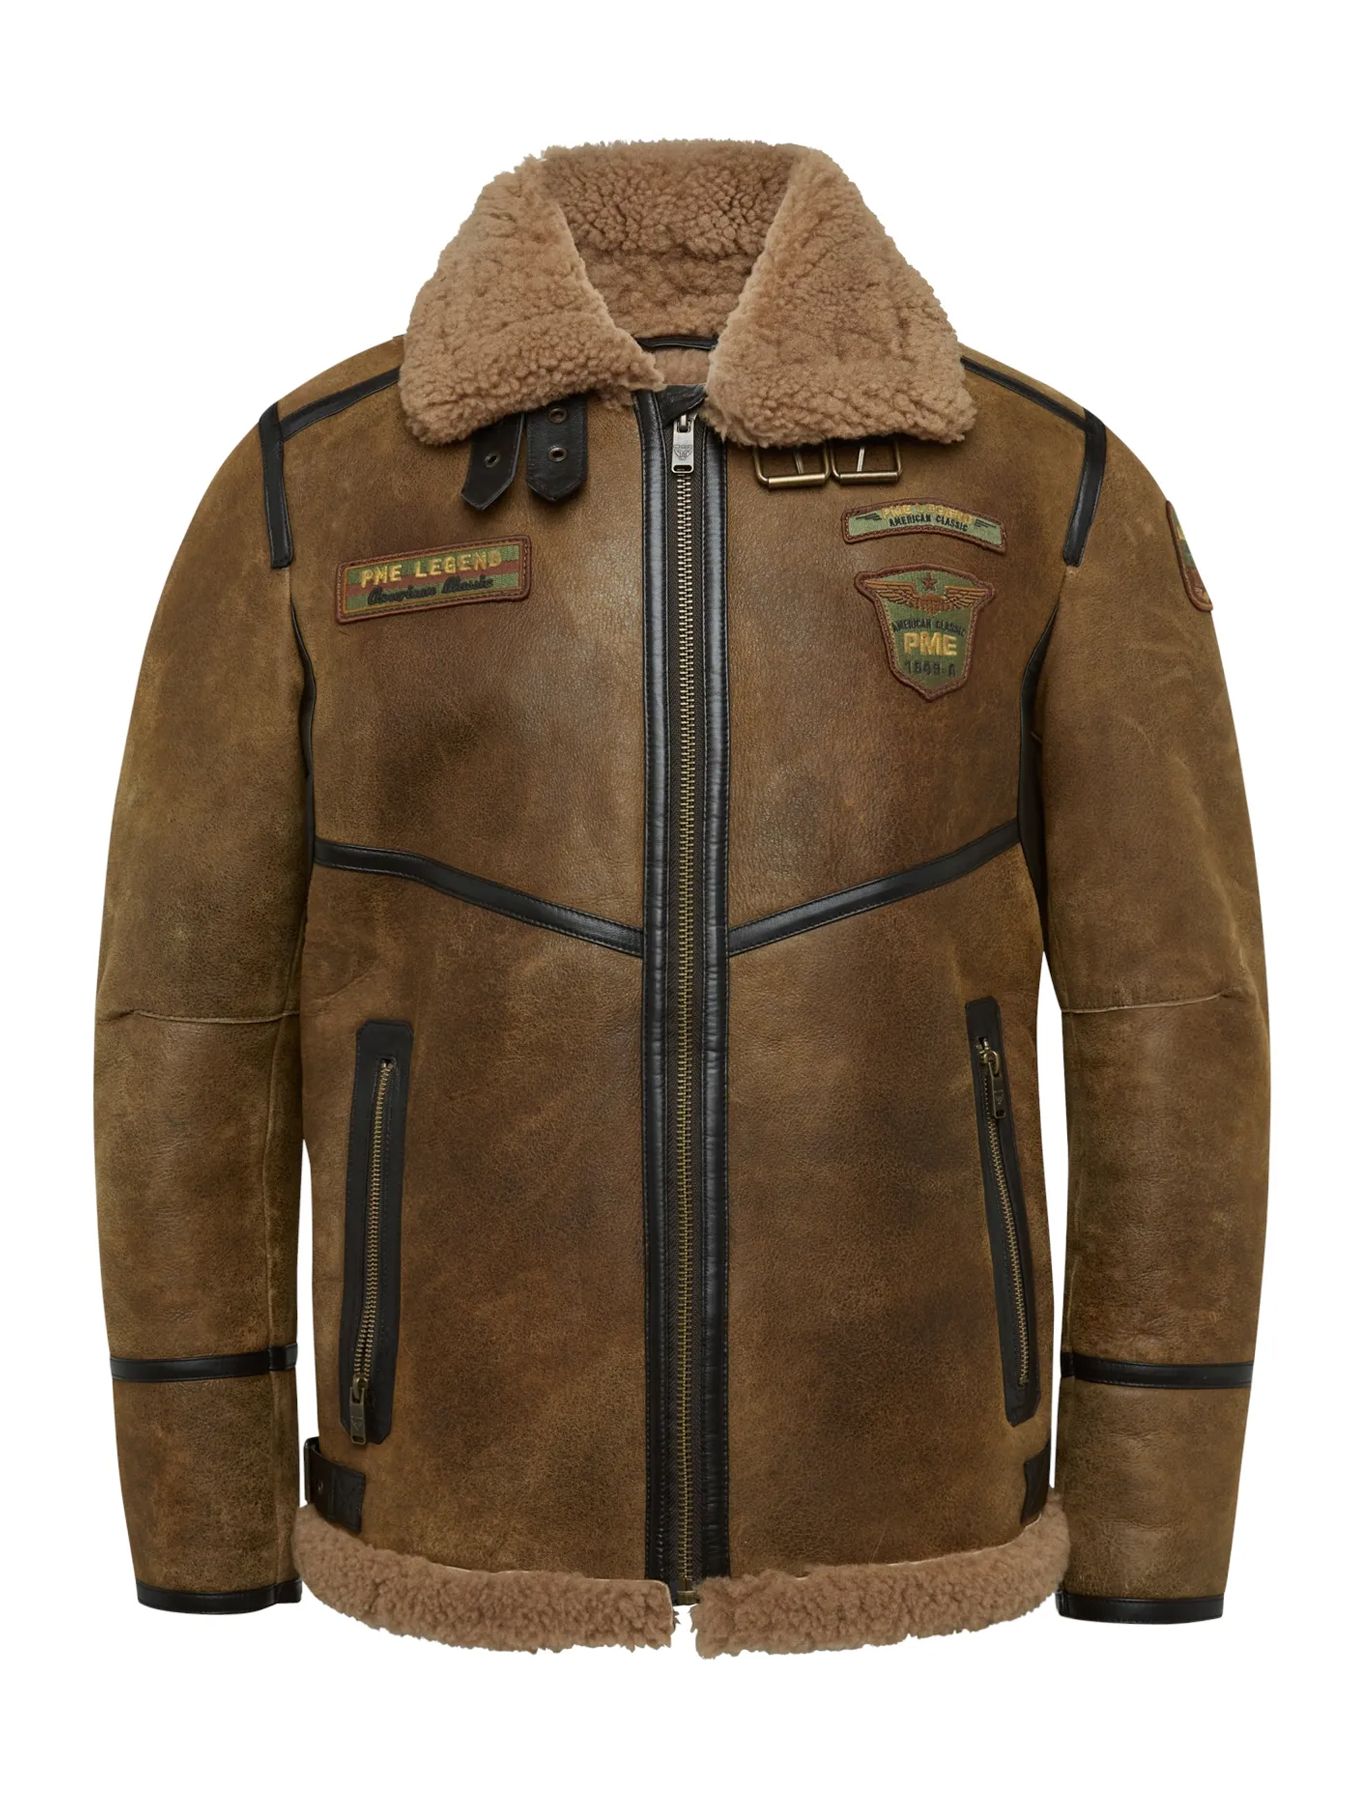 Pme Legend Short jacket LIMITED TURBOPROP Lam - Brown Brown 00097589-769